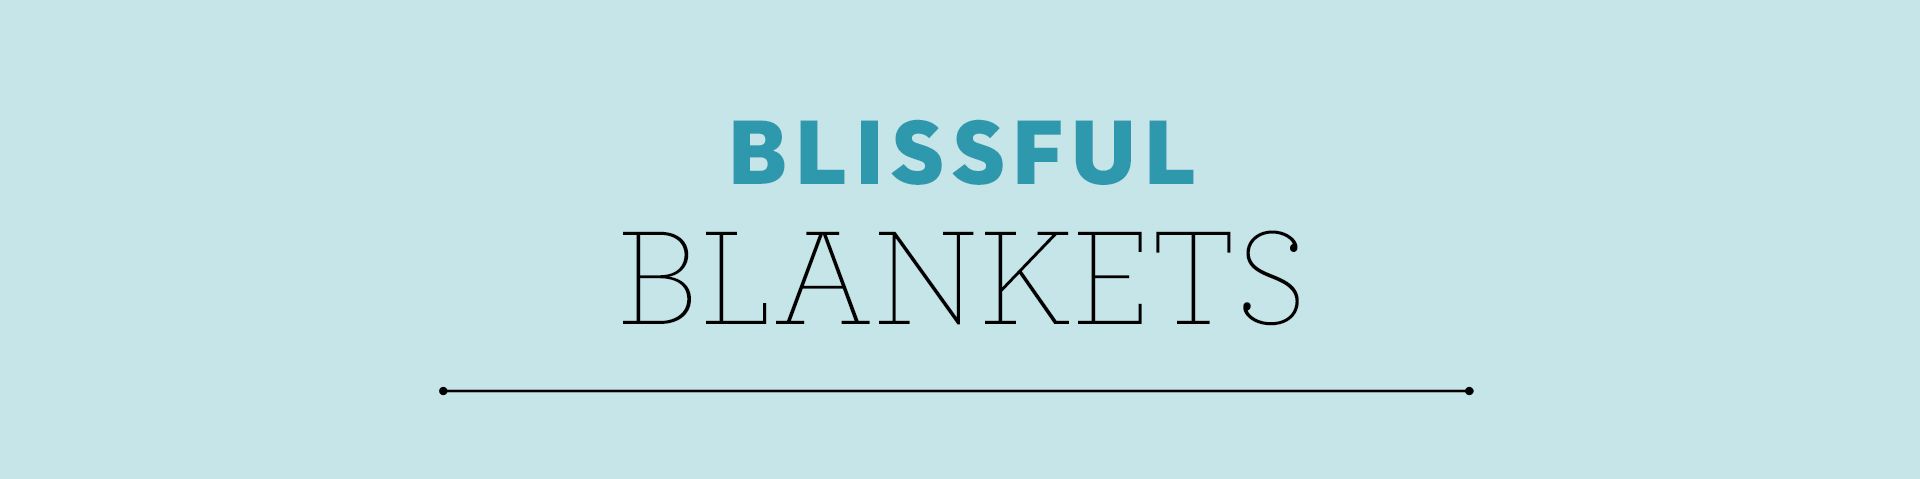 blissful blankets section header